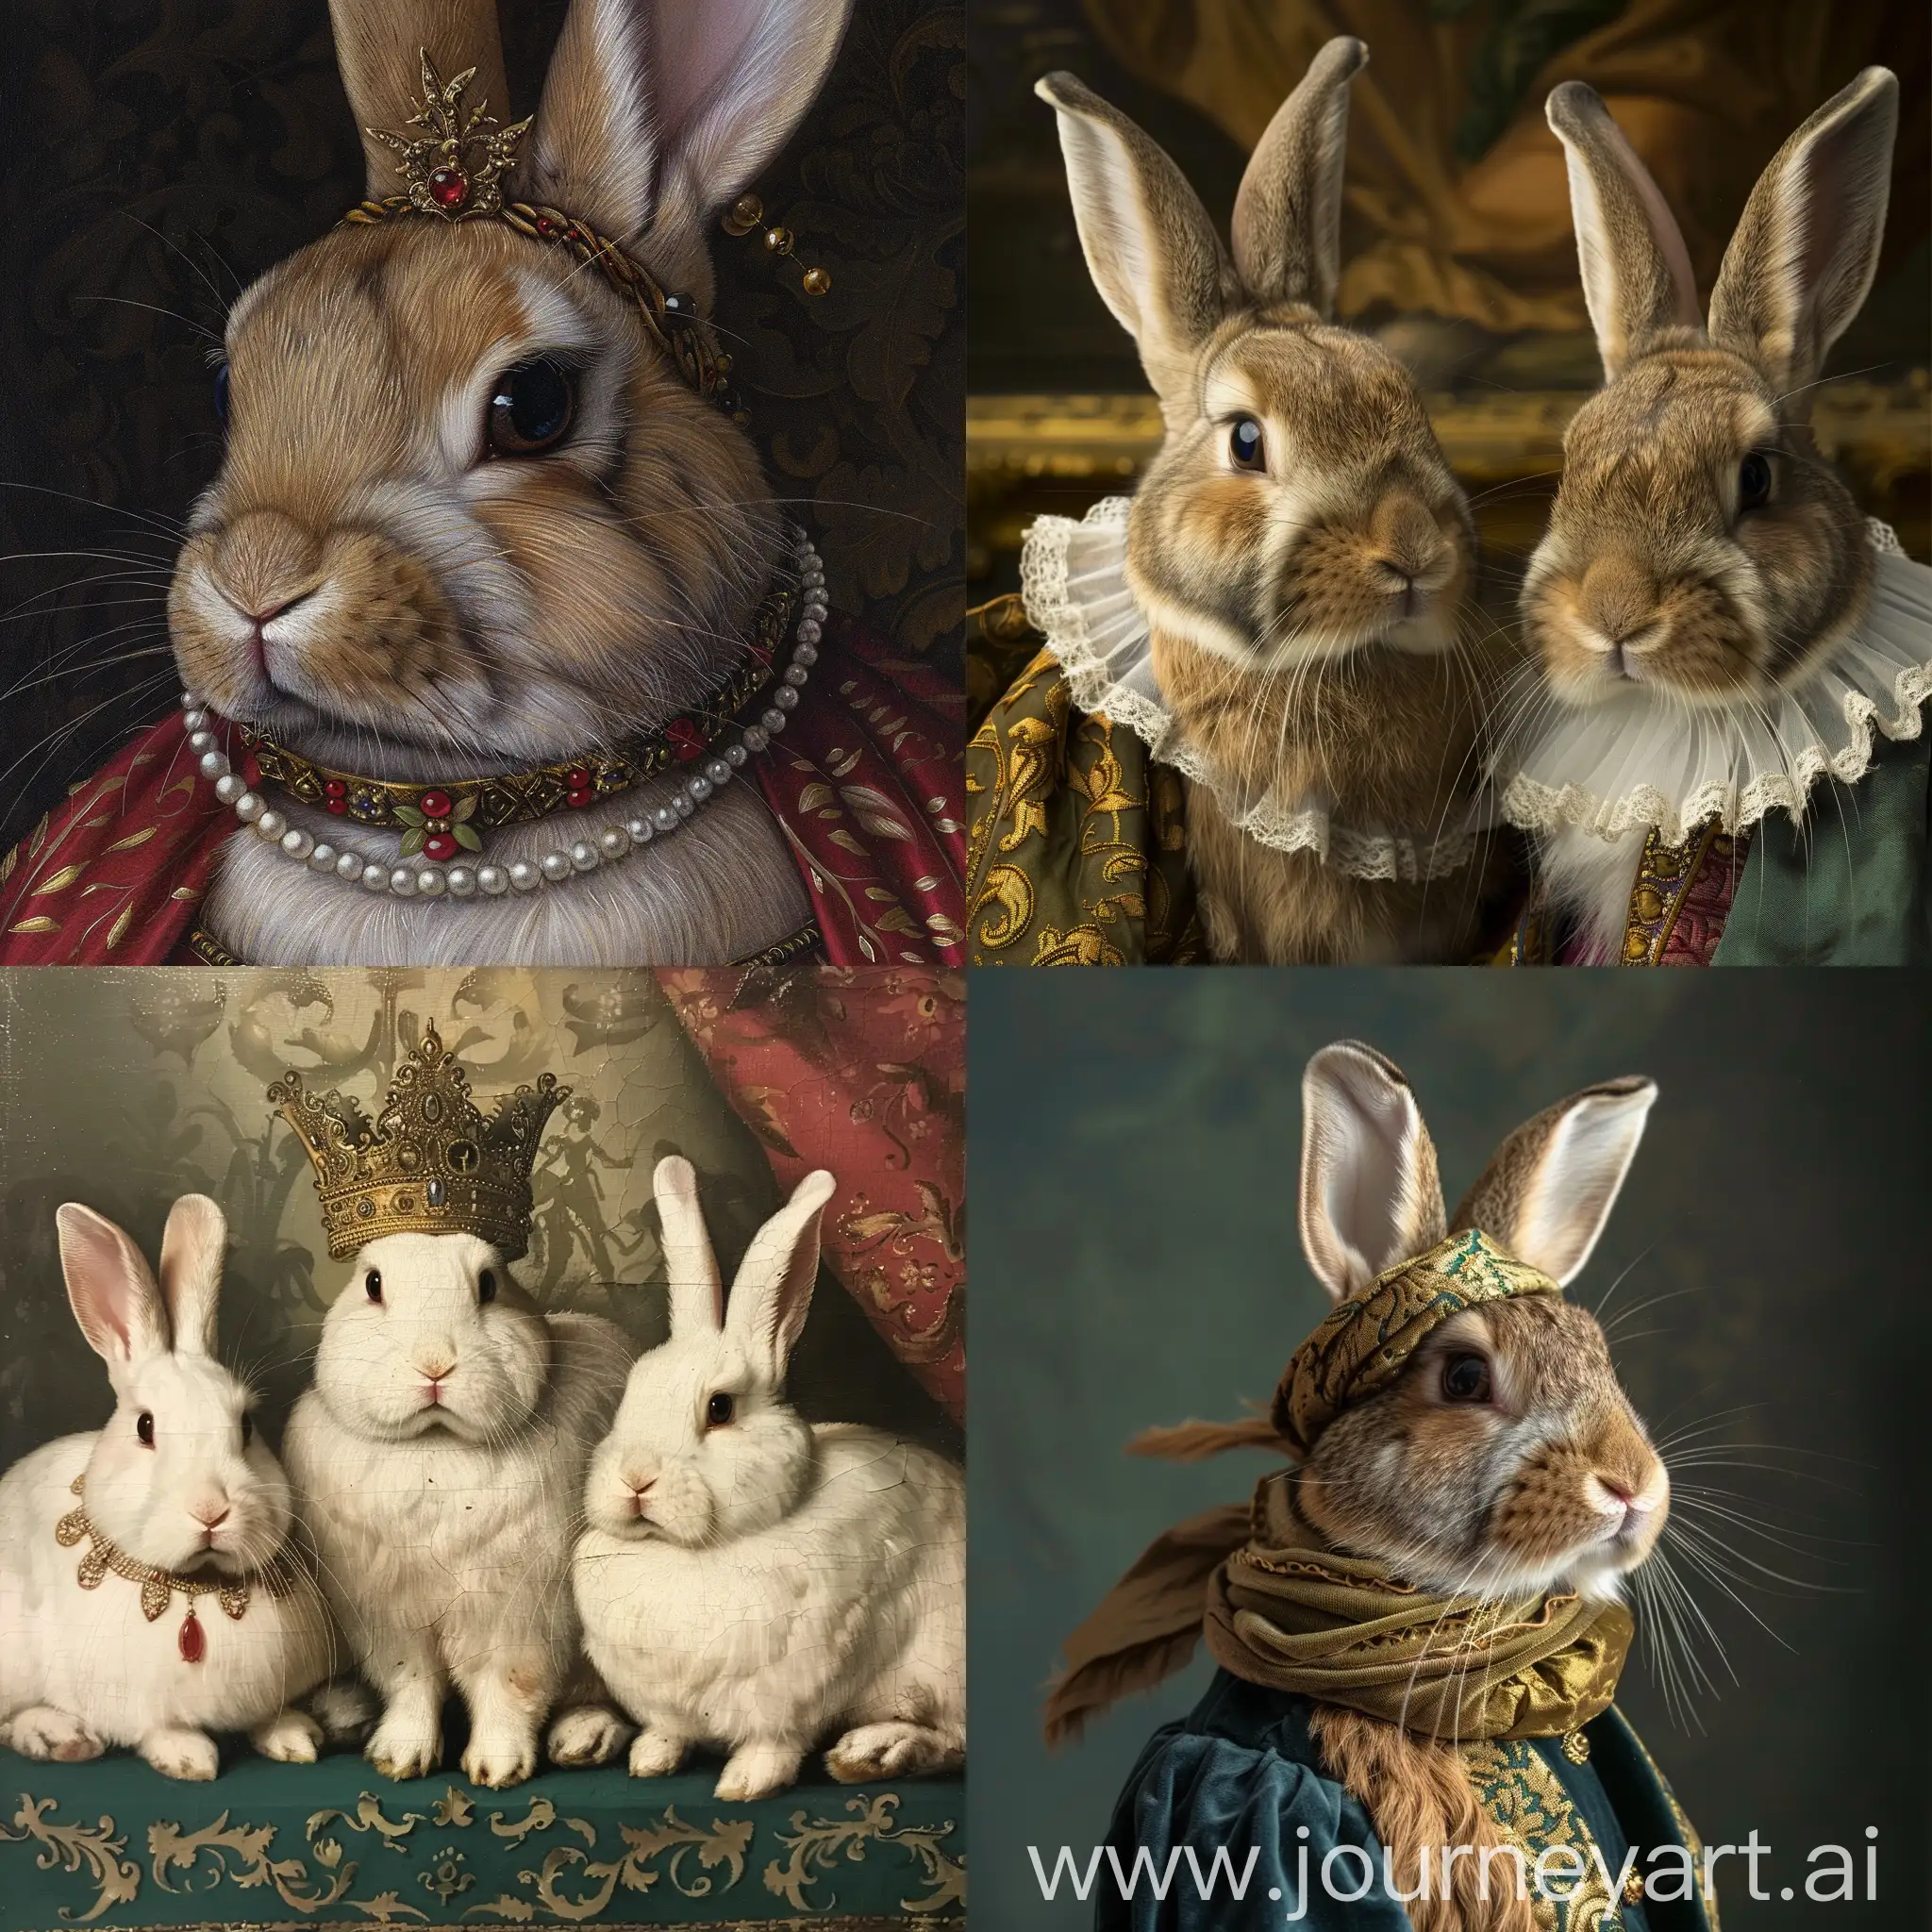 Renaissance bunnies
